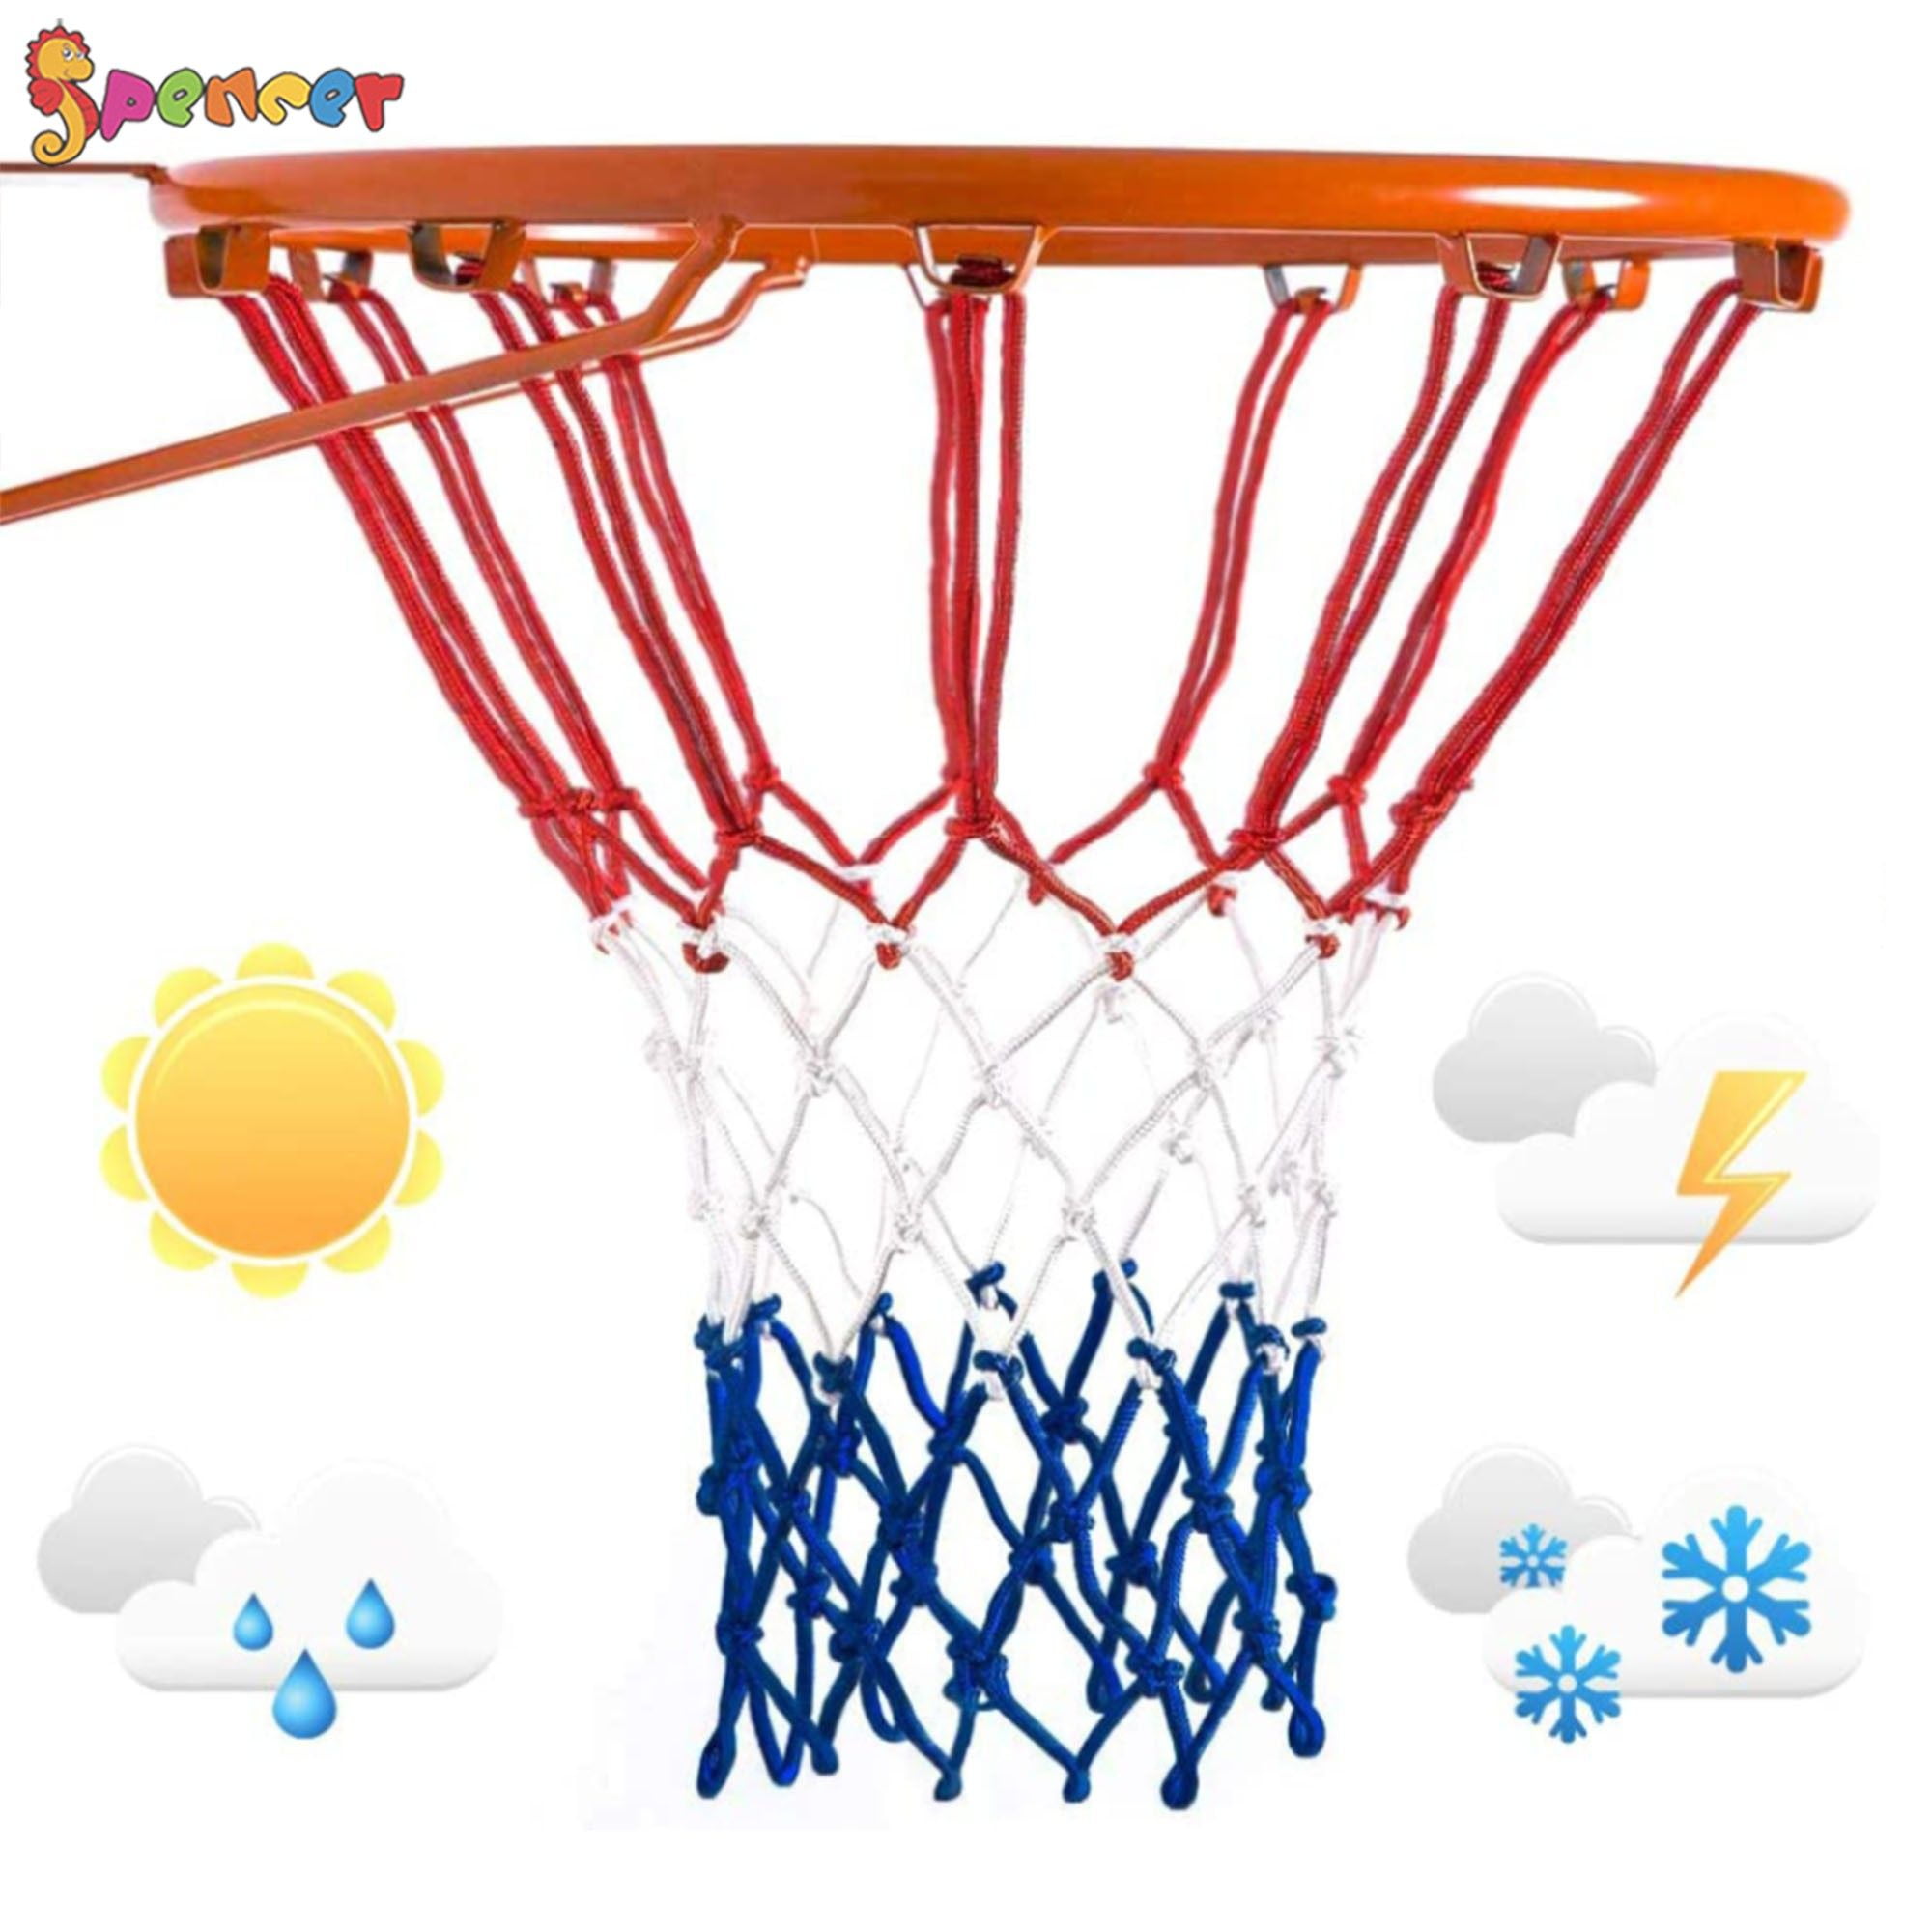 Heavy Duty Basketball Net,Durable Nylon Basketball Net,Professional 12 Loop Basketball Net Replacement,Tri-colored Basketball Hoop Net Accessories,Fits Standard Indoor or Outdoor Basketball Hoop 